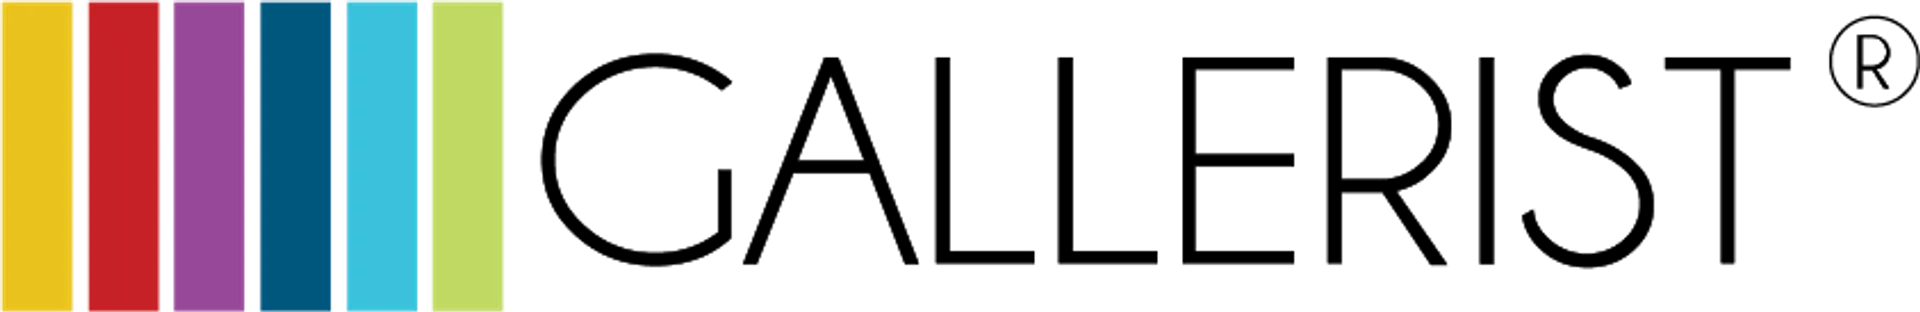 GALLERIST logo. Current weekly ad